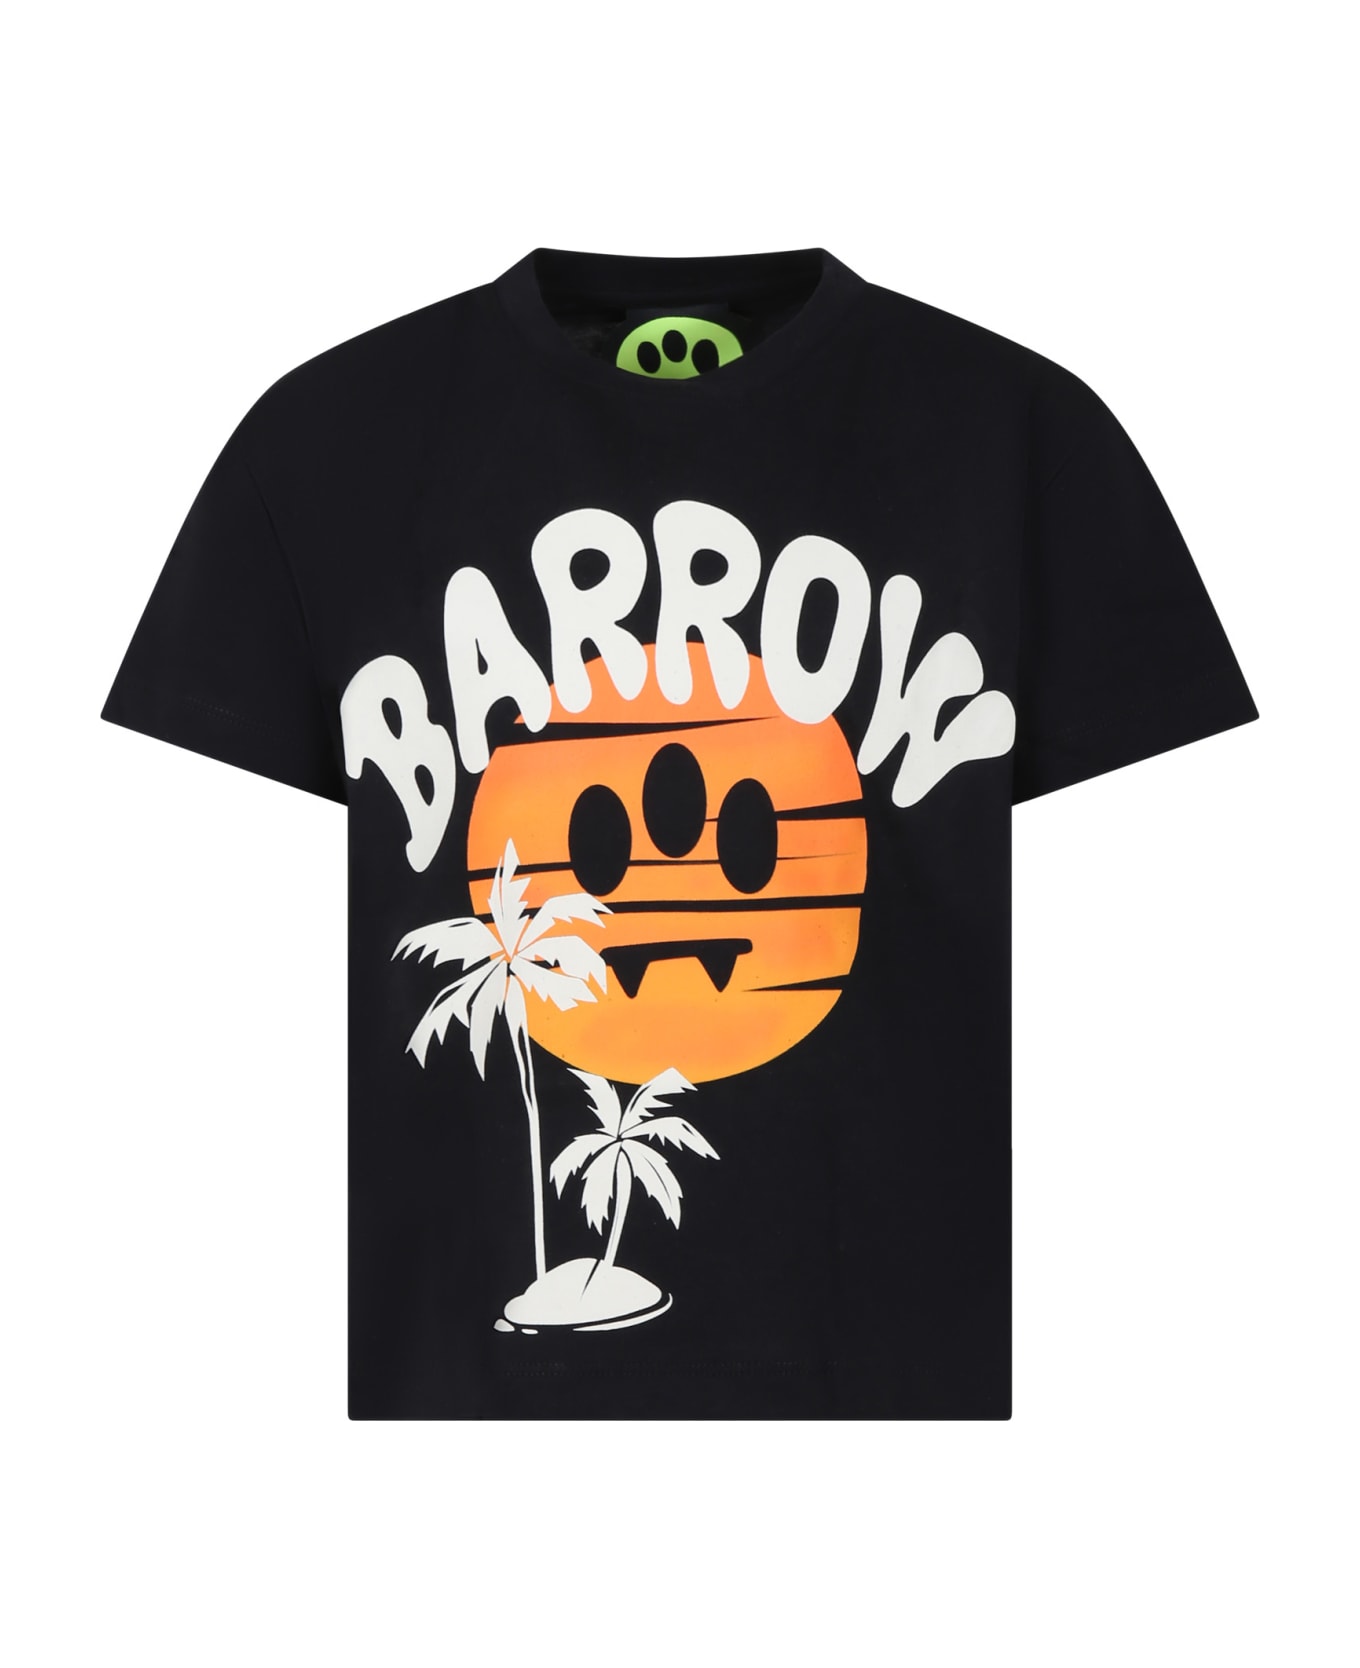 Barrow Black T-shirt For Boy With Logo - Nero/Black Tシャツ＆ポロシャツ